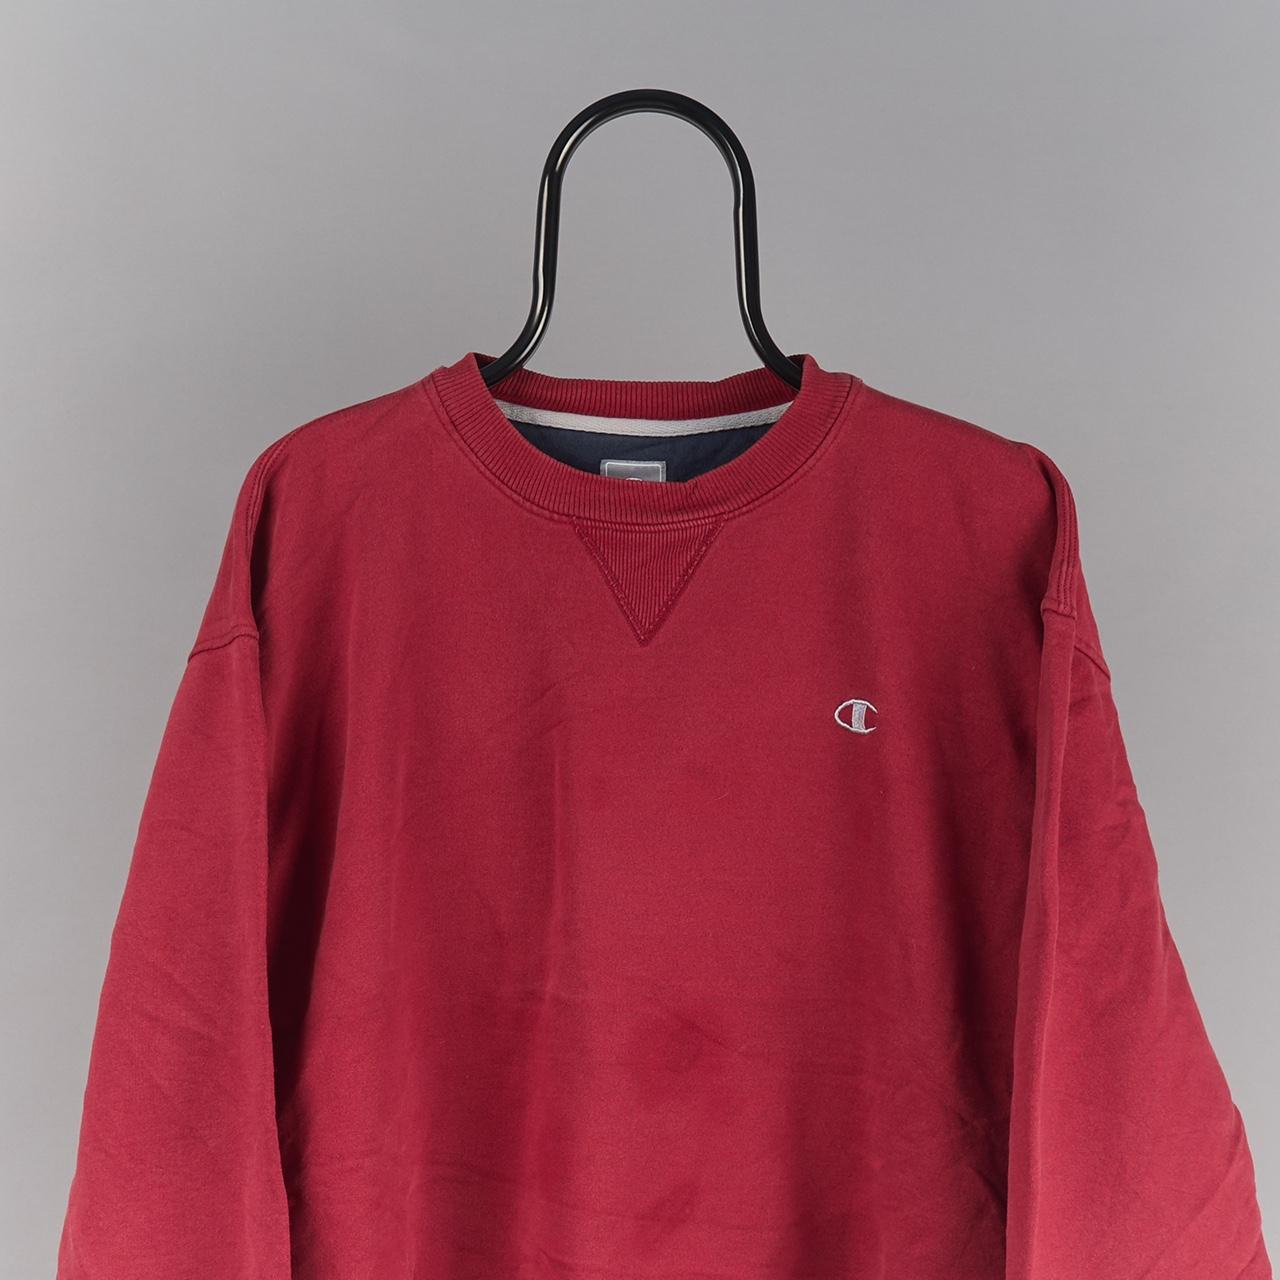 Vintage Champion Sweatshirt Red Large Really nice... - Depop